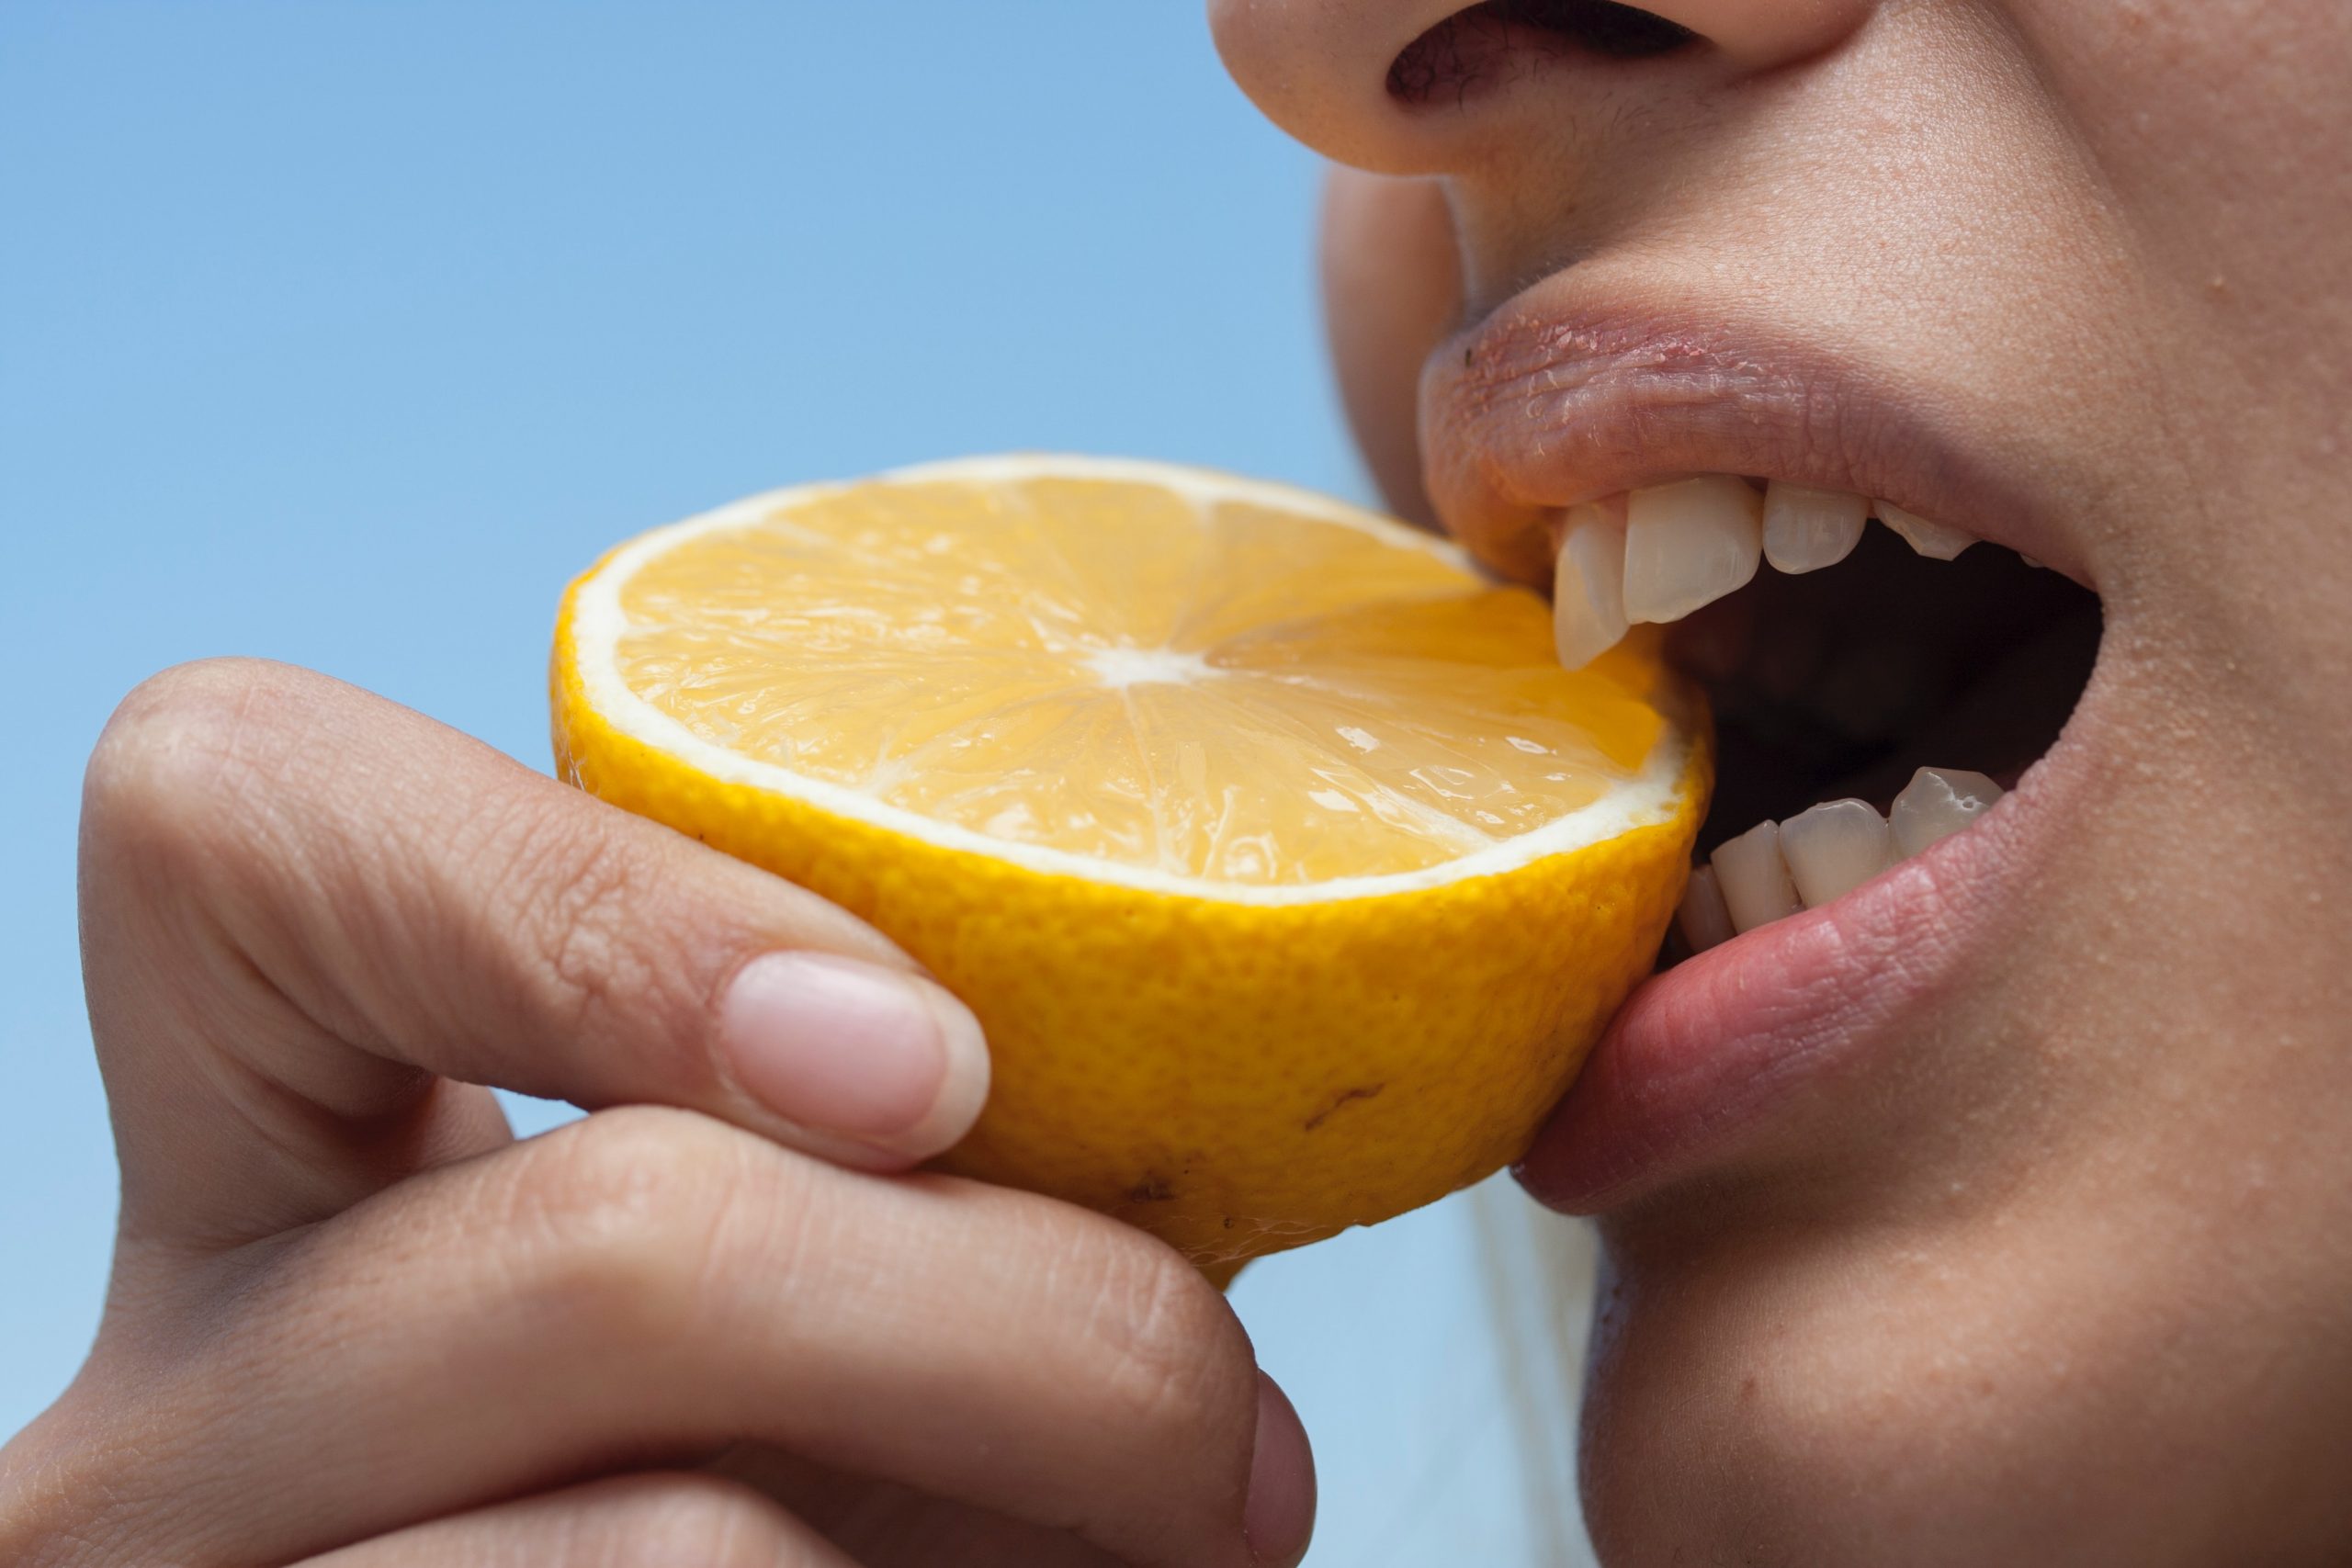 Biting half of lemon with exposed teeth.